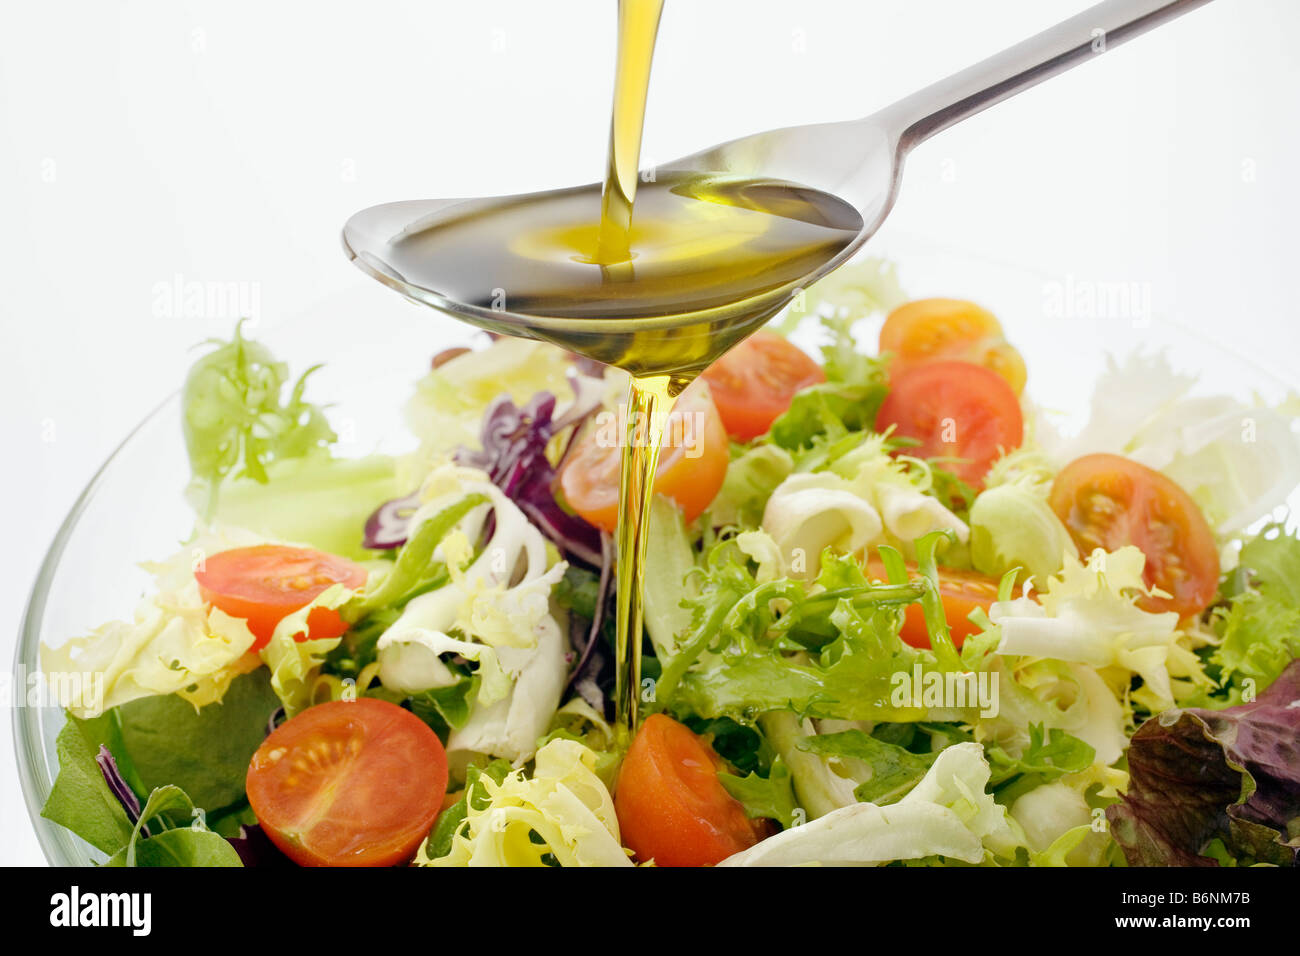 Extra virgin olive oil and salad typical of the Mediterranean diet aceite de oliva virgen extra ensalada dieta mediterranea Stock Photo